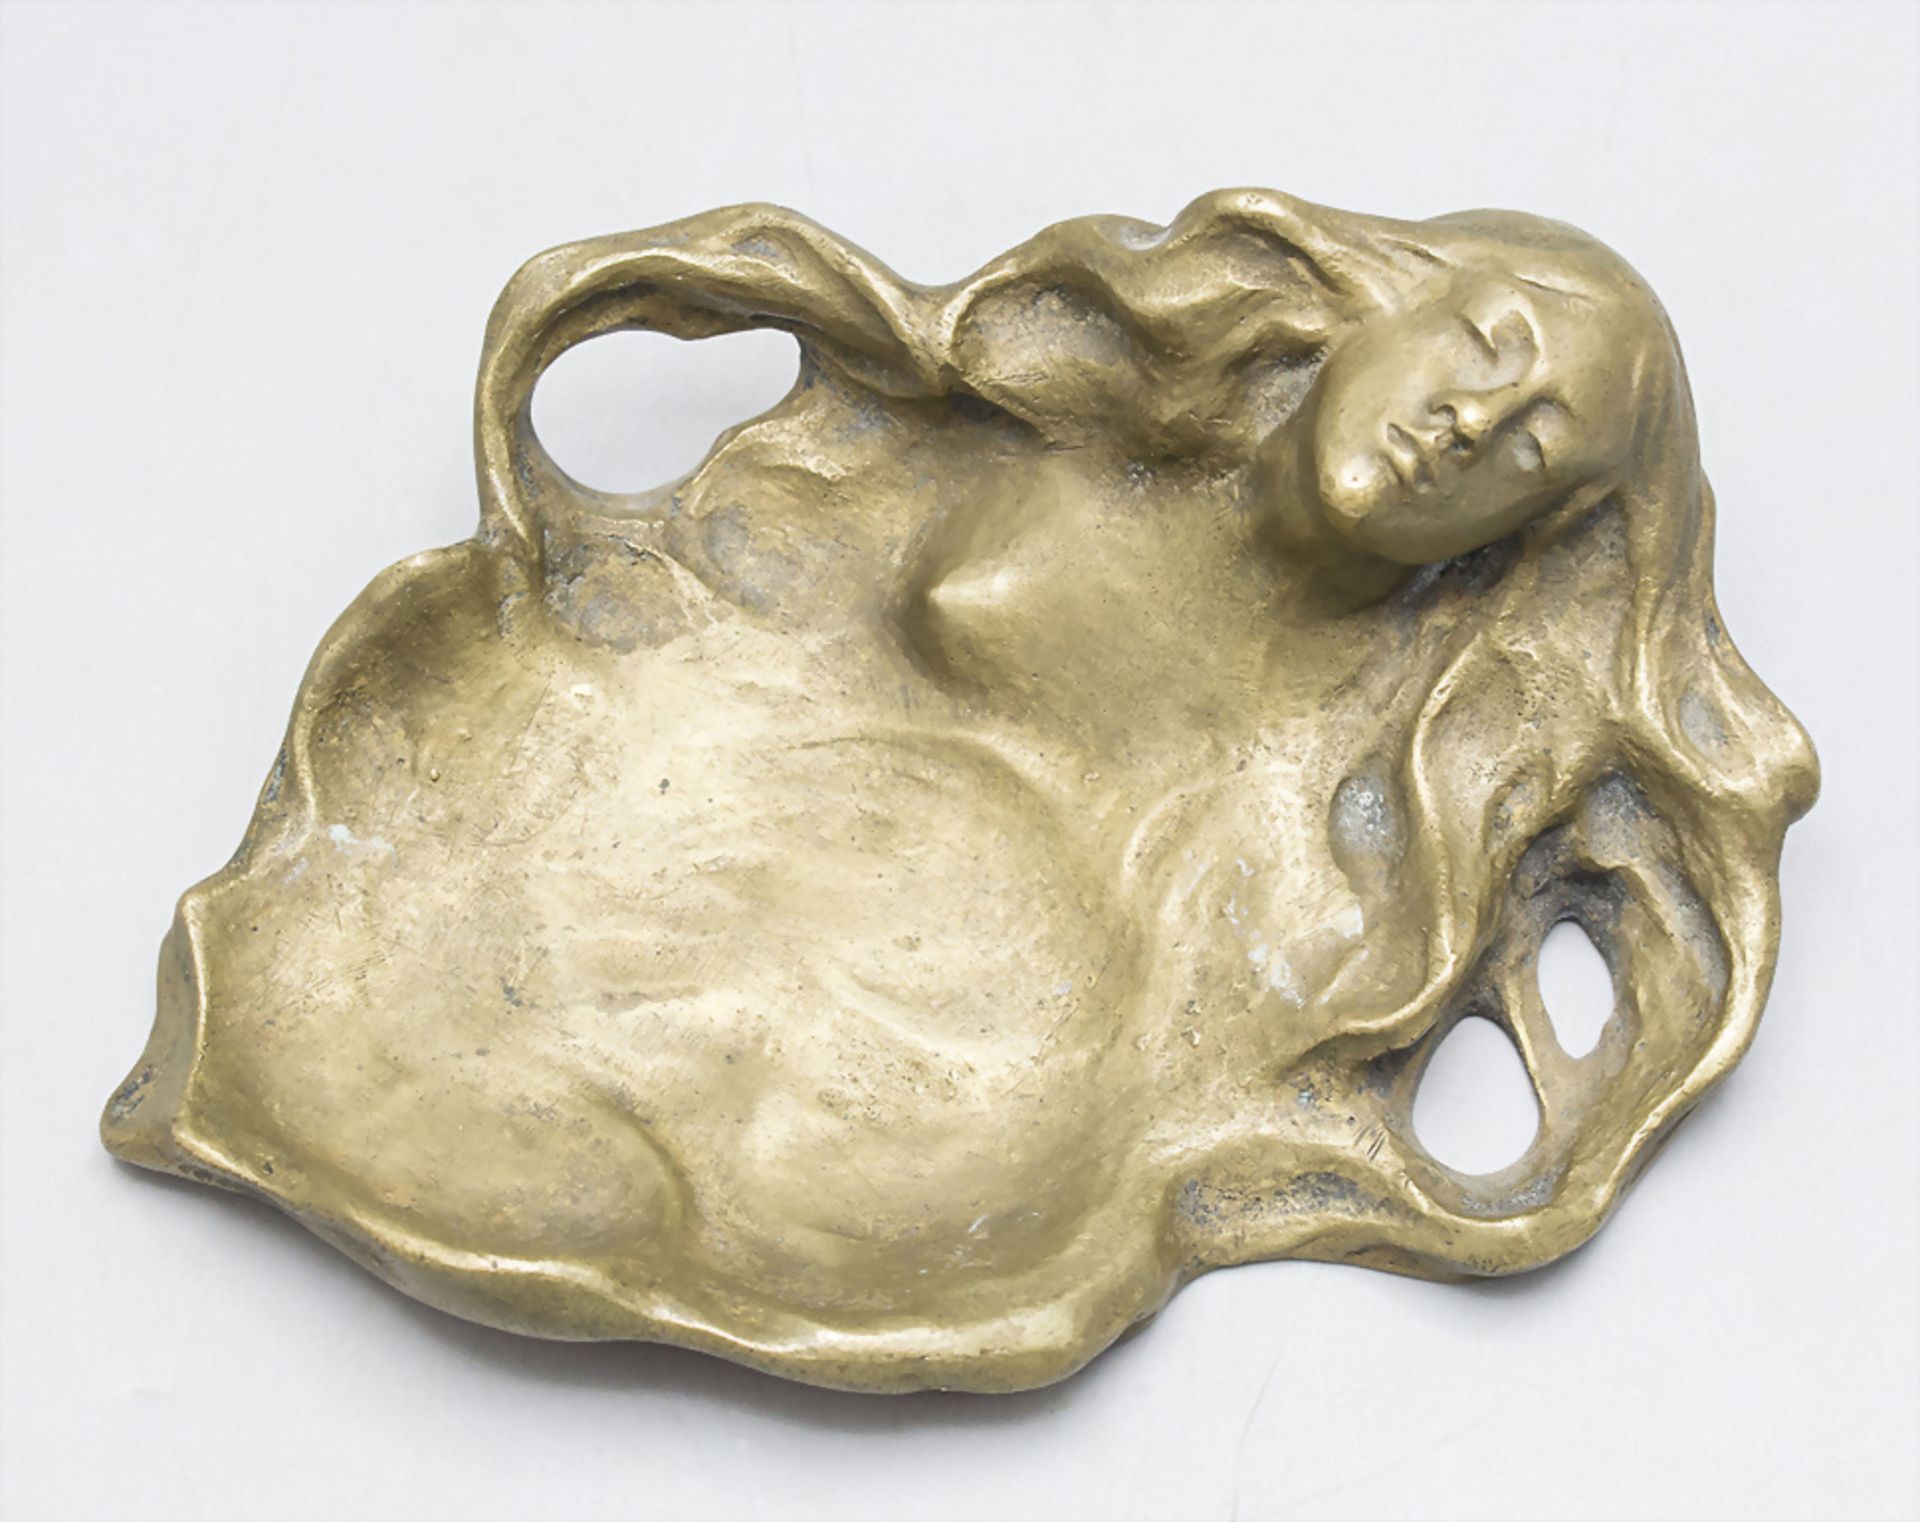 Erotische Jugendstil Bronzeschale / An erotic Art Nouveau vide poche, Frankreich, um 1900